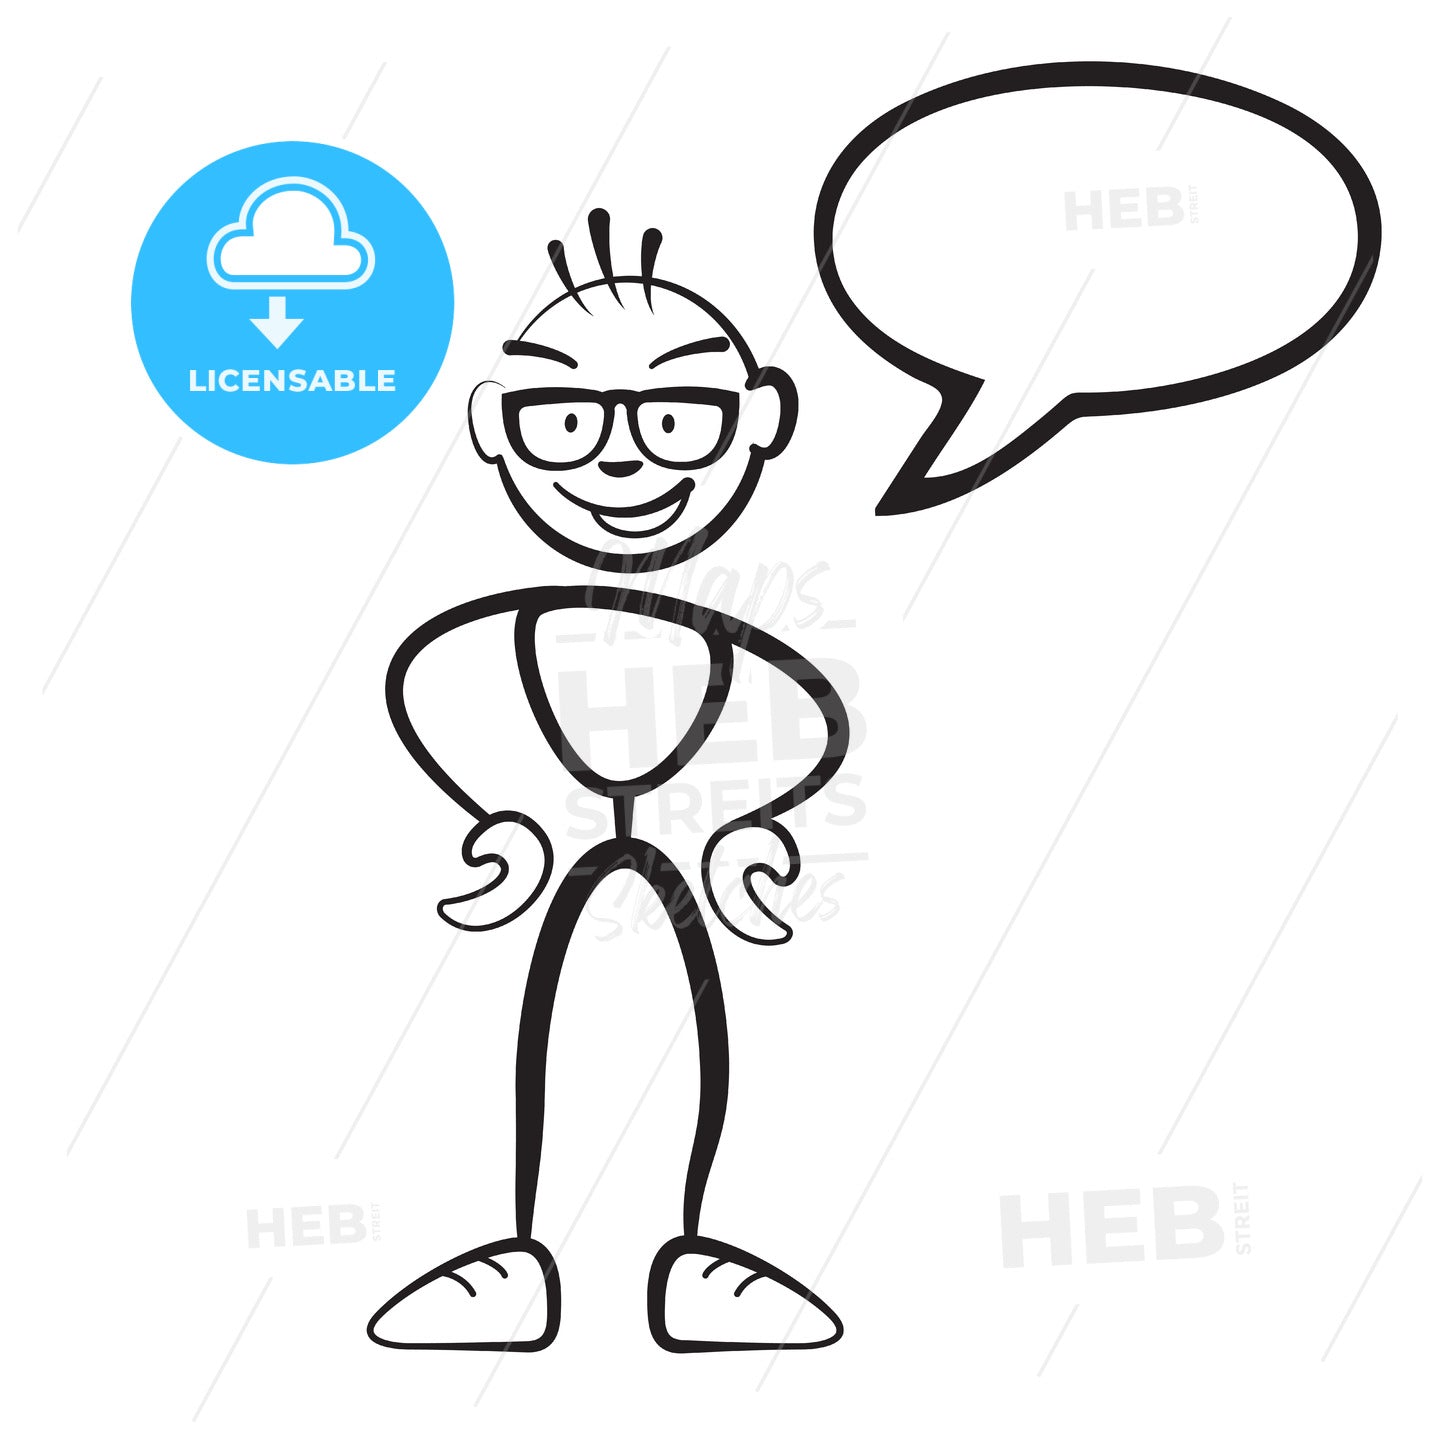 Stick figure man persona with speech bubble, Stickman vector